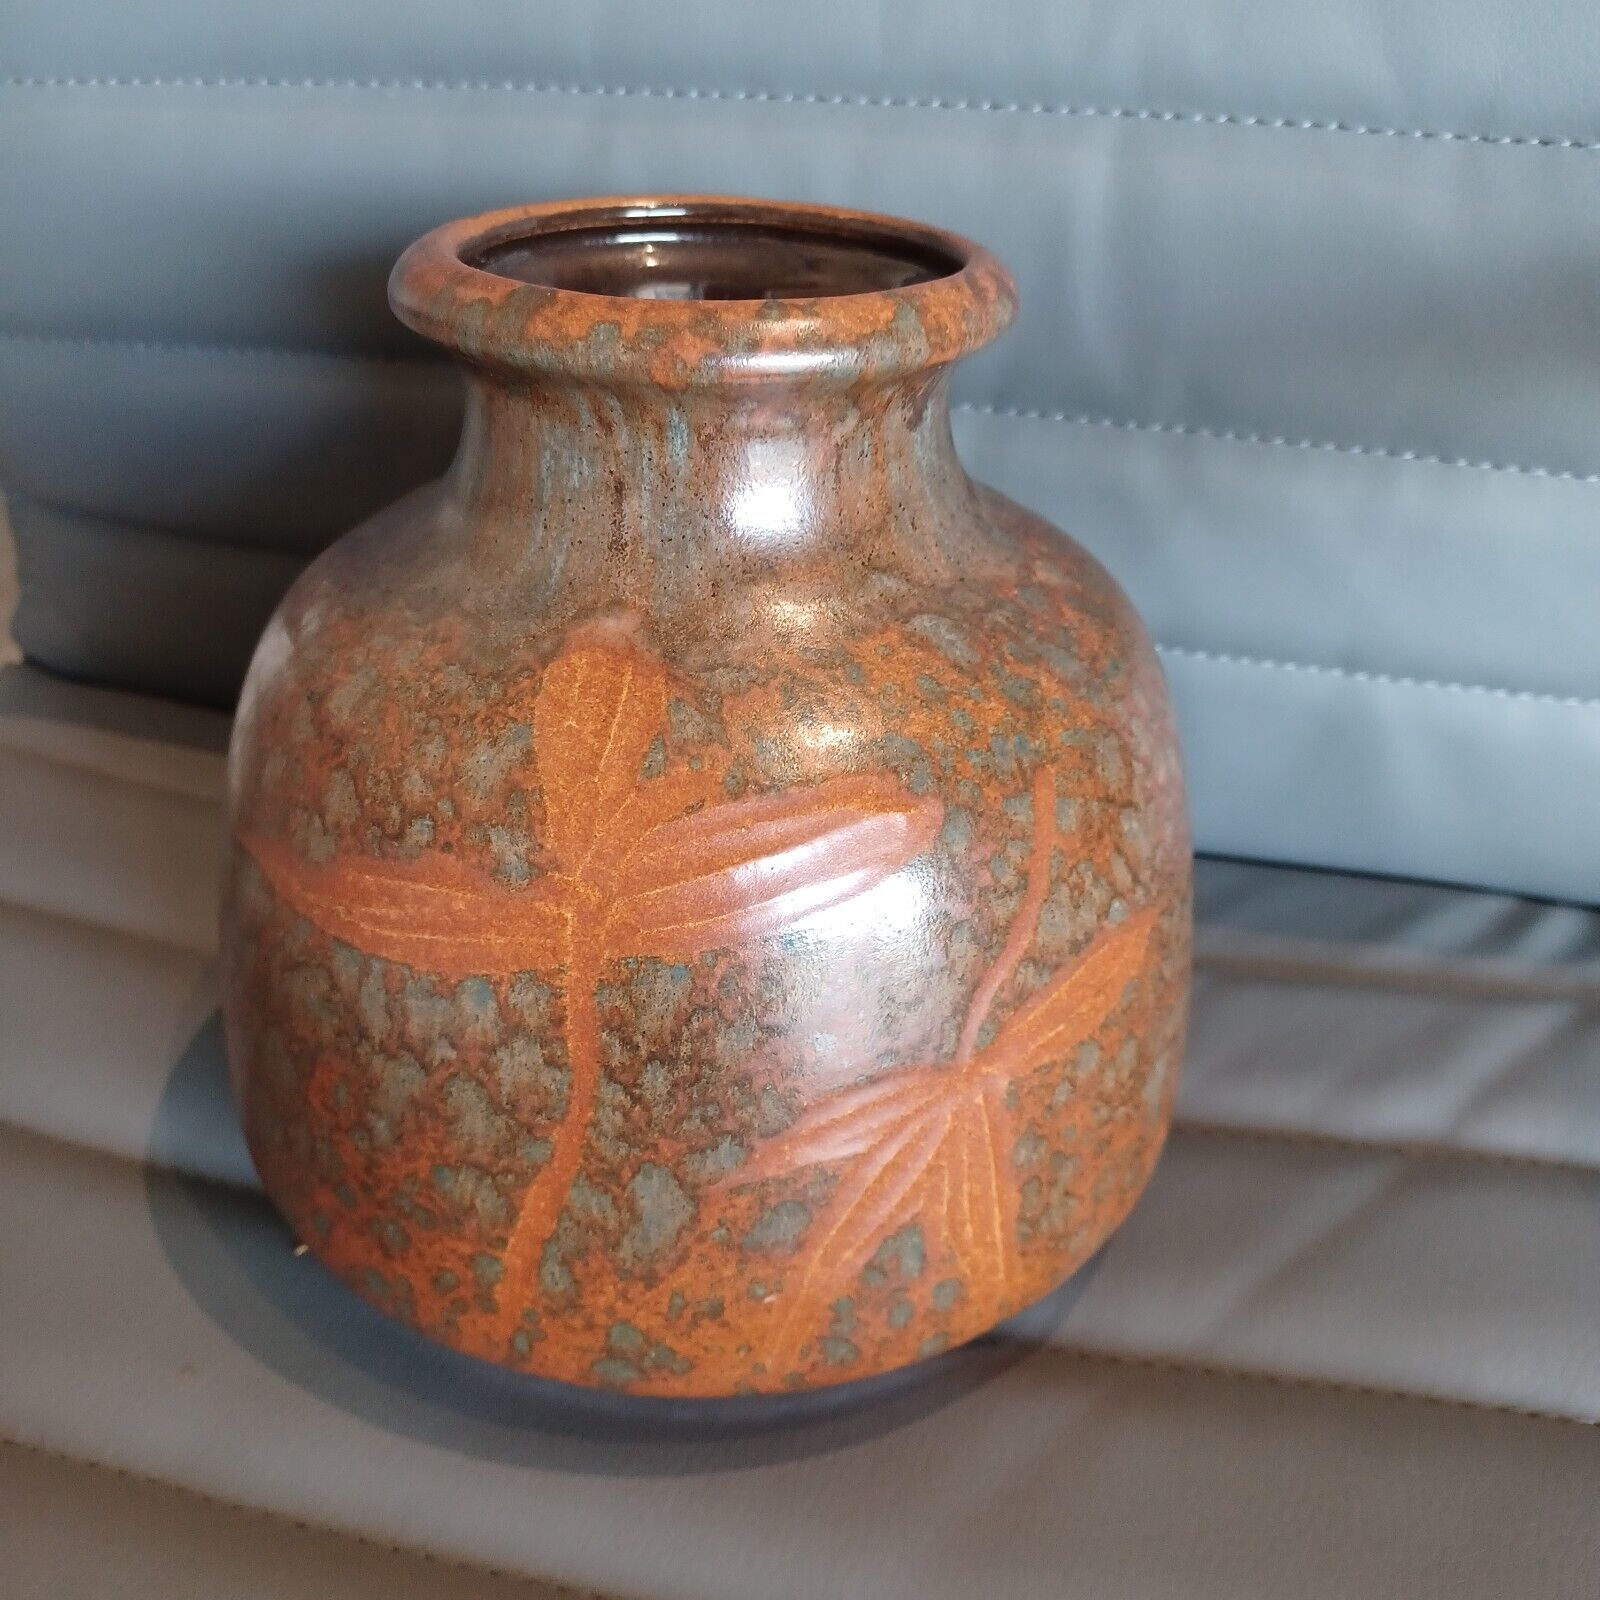 SCHEURICH KERAMIK Earth Tone Leaf Vase 293-16 West German Pottery Vintage 1970s